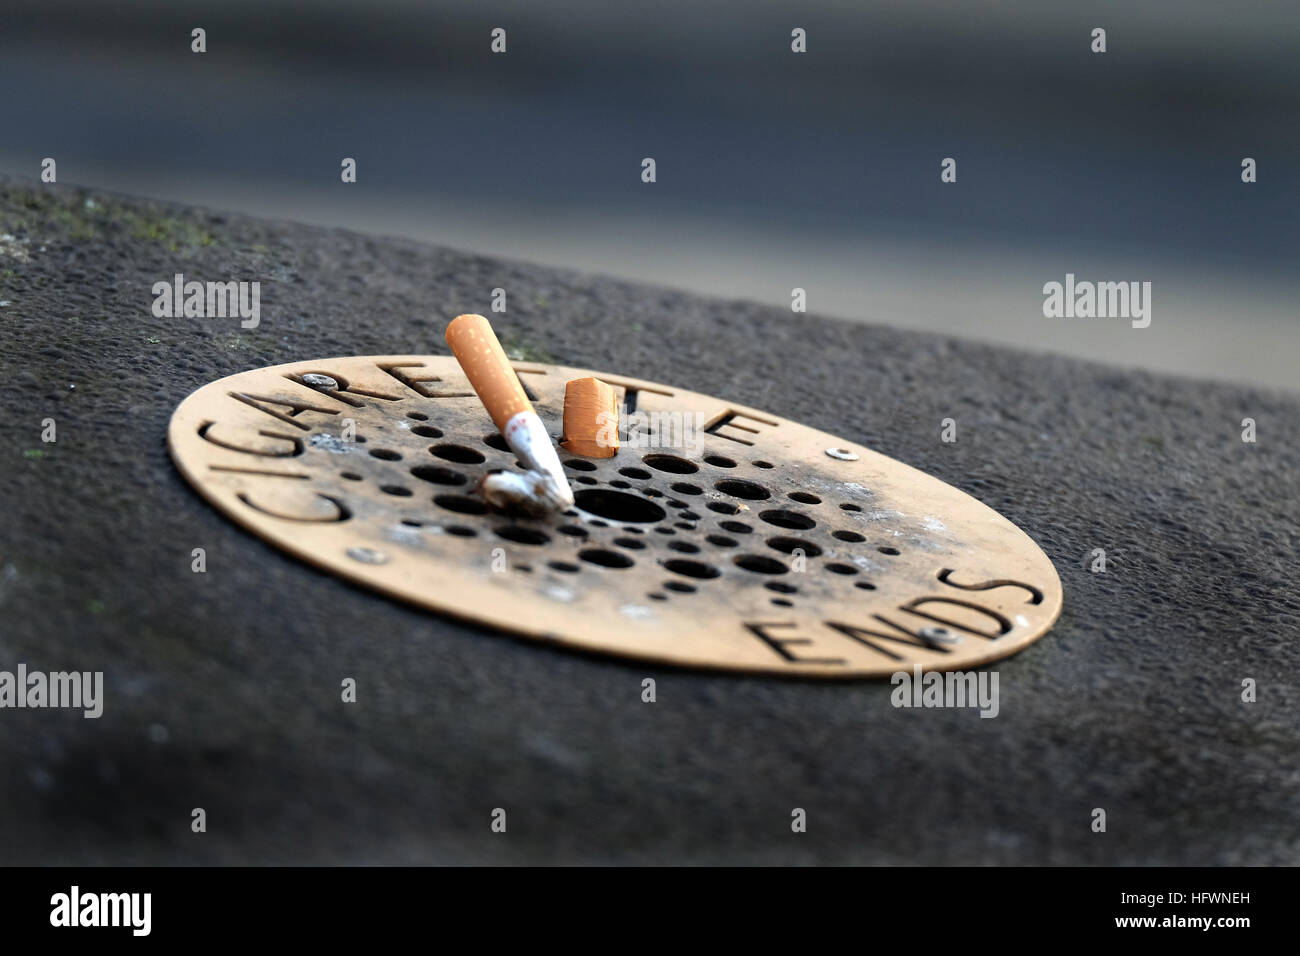 Stubbed cigarette ends on street bin. Stock Photo